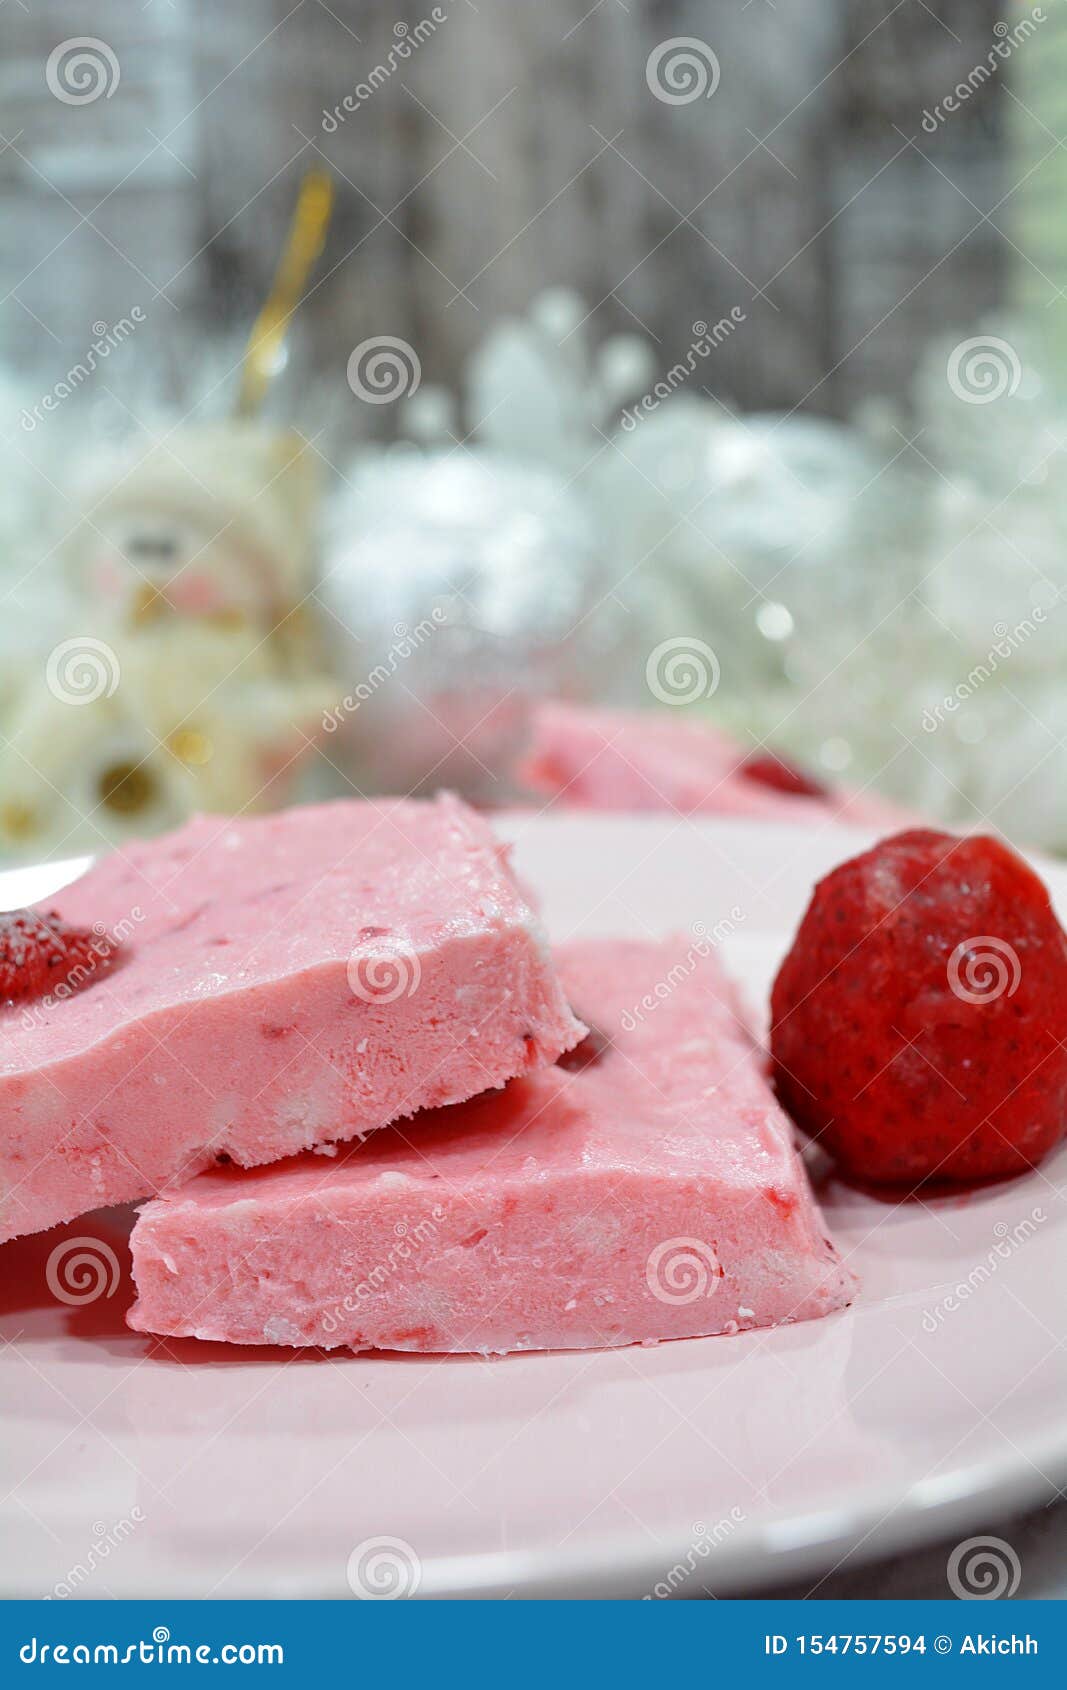 Sugar - Free Frozen Strawberry Ice Cream Slices Stock Photo - Image of ...